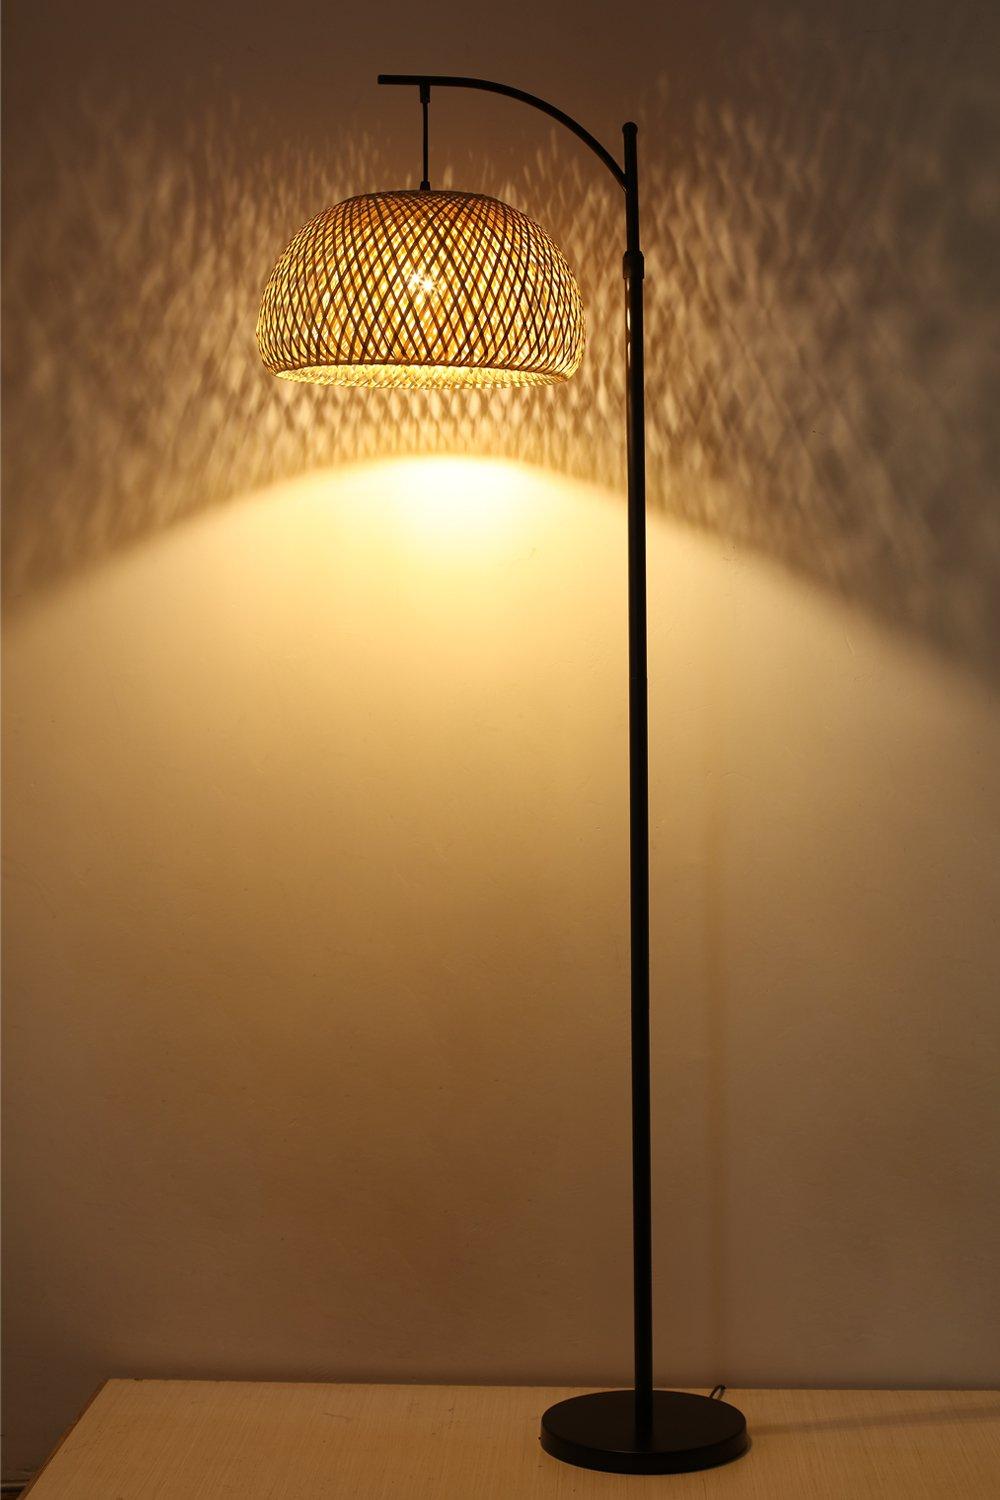 Traditional Woven Rattan Floor Lamp